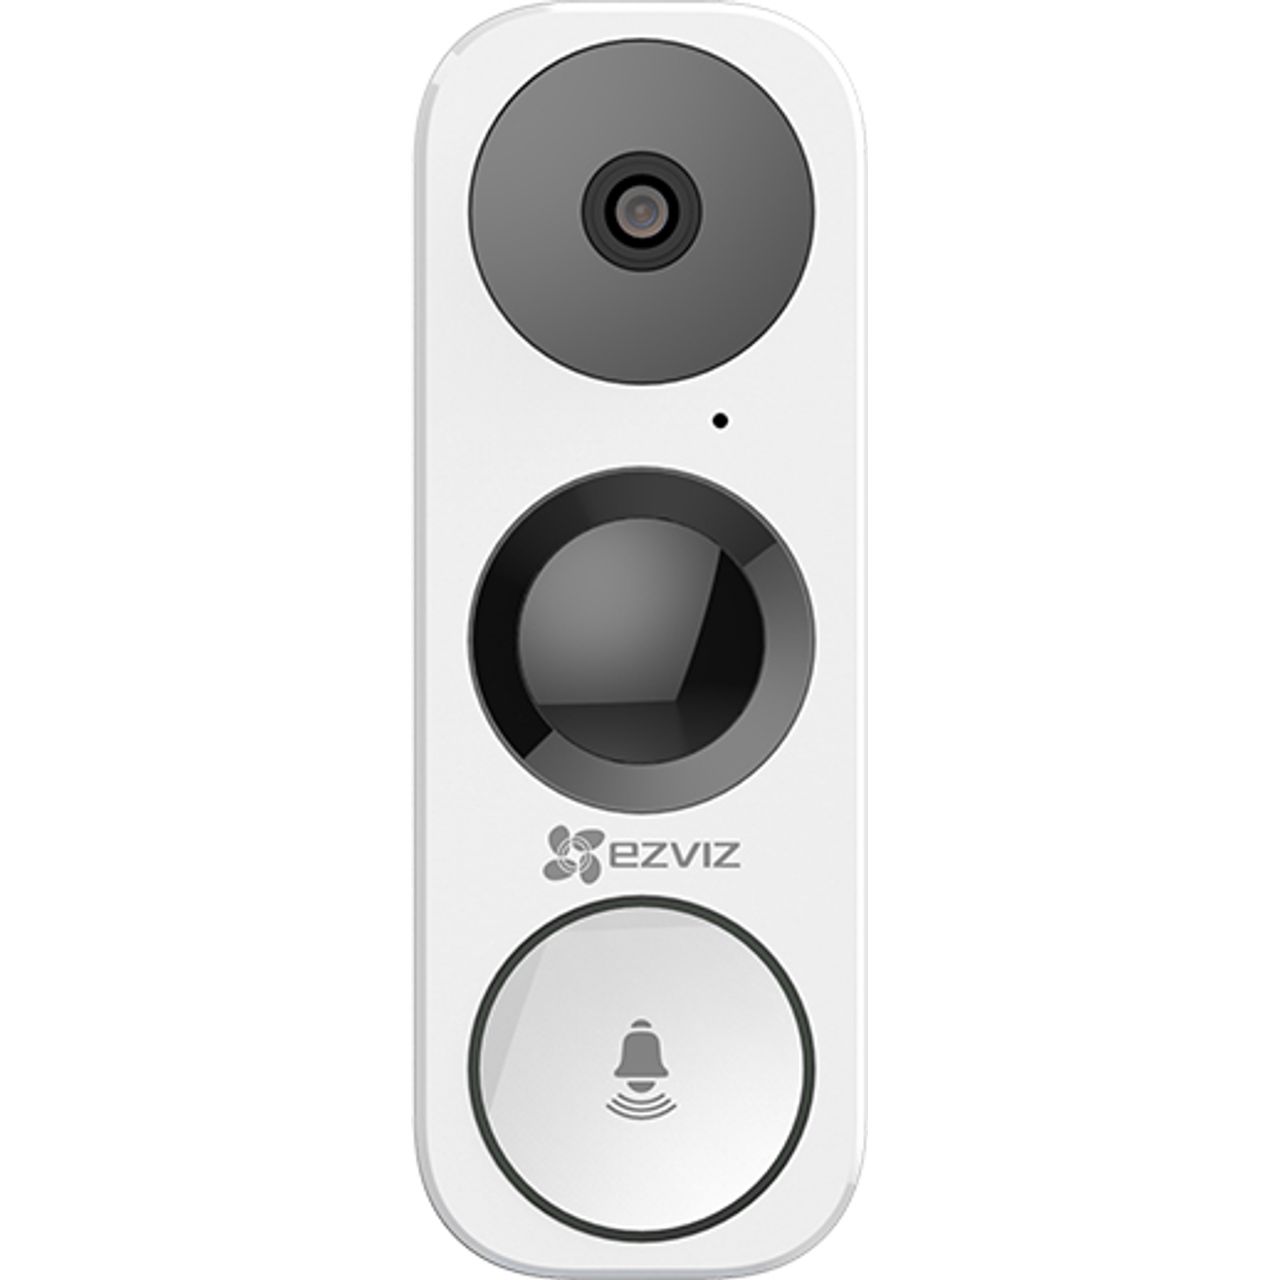 EZVIZ DB1 Video Doorbell Full HD 1080p Review